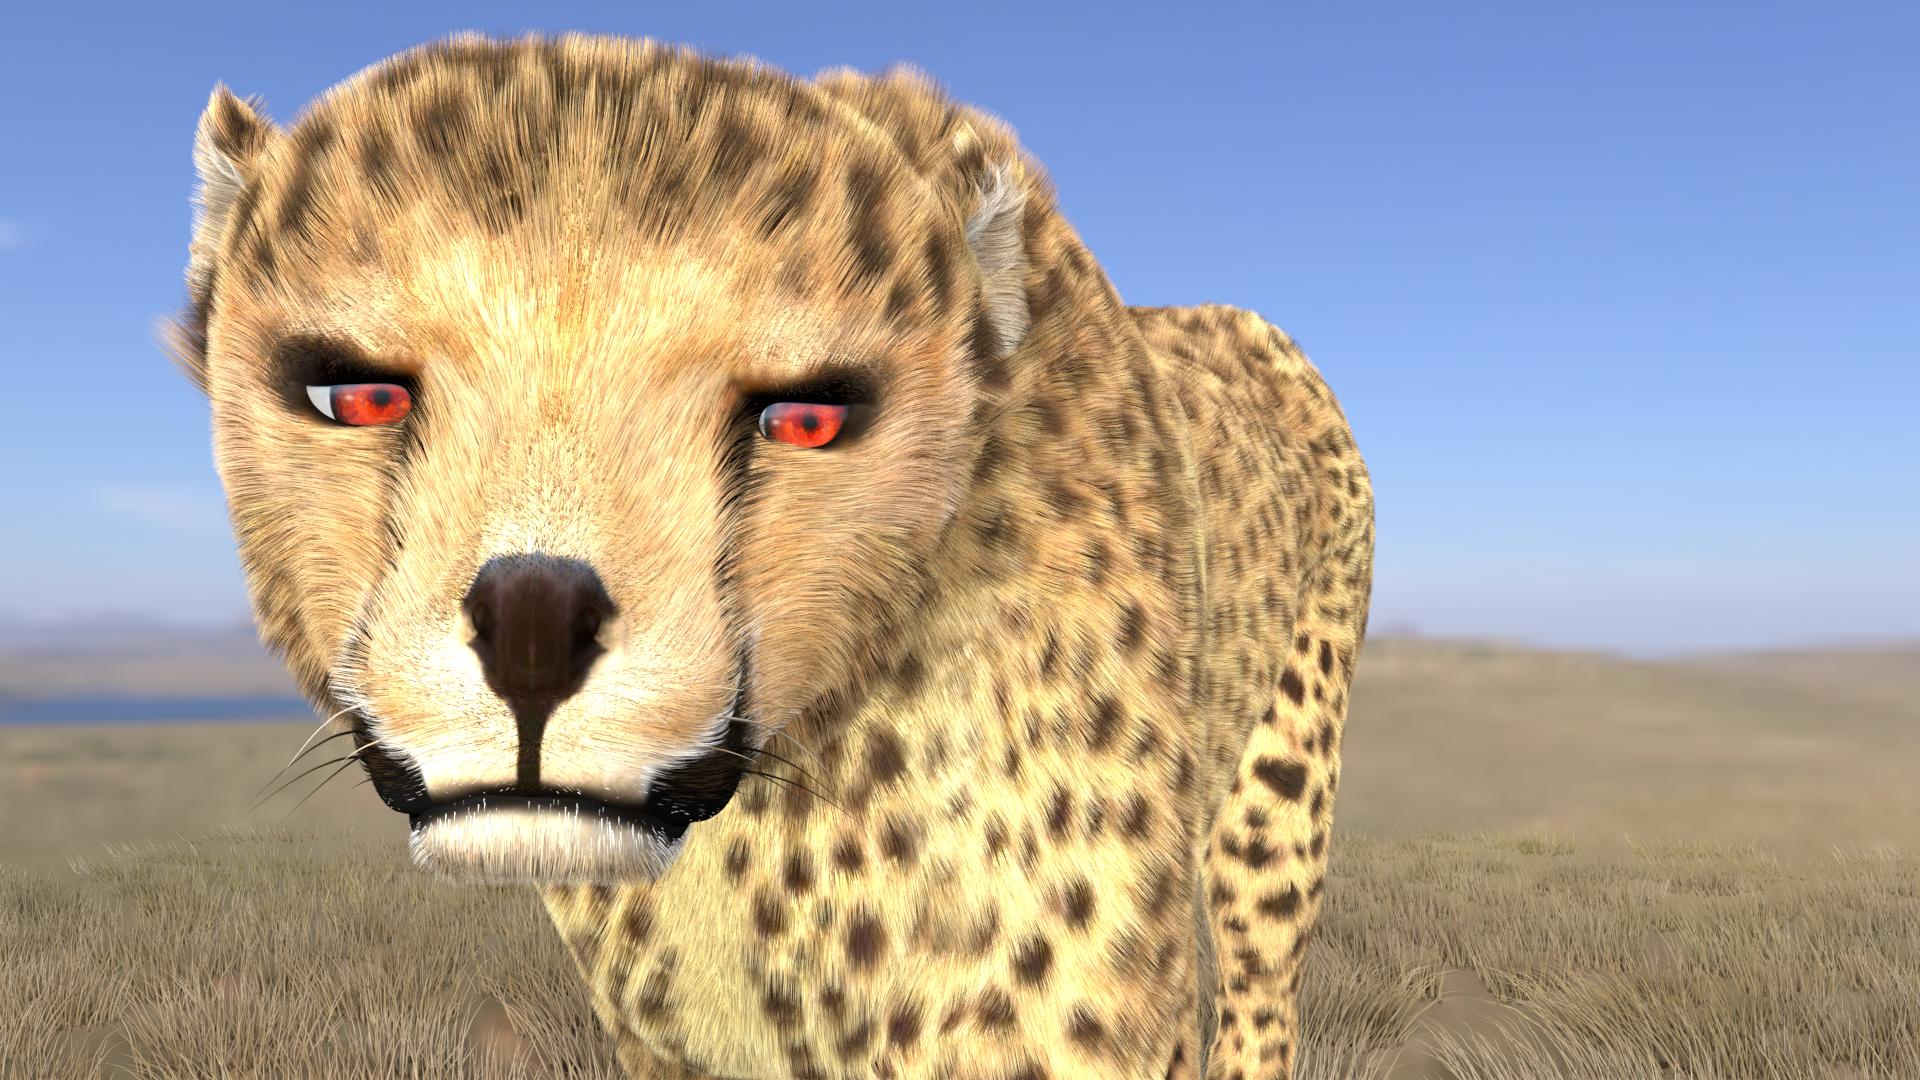 Cheetah preview image 2